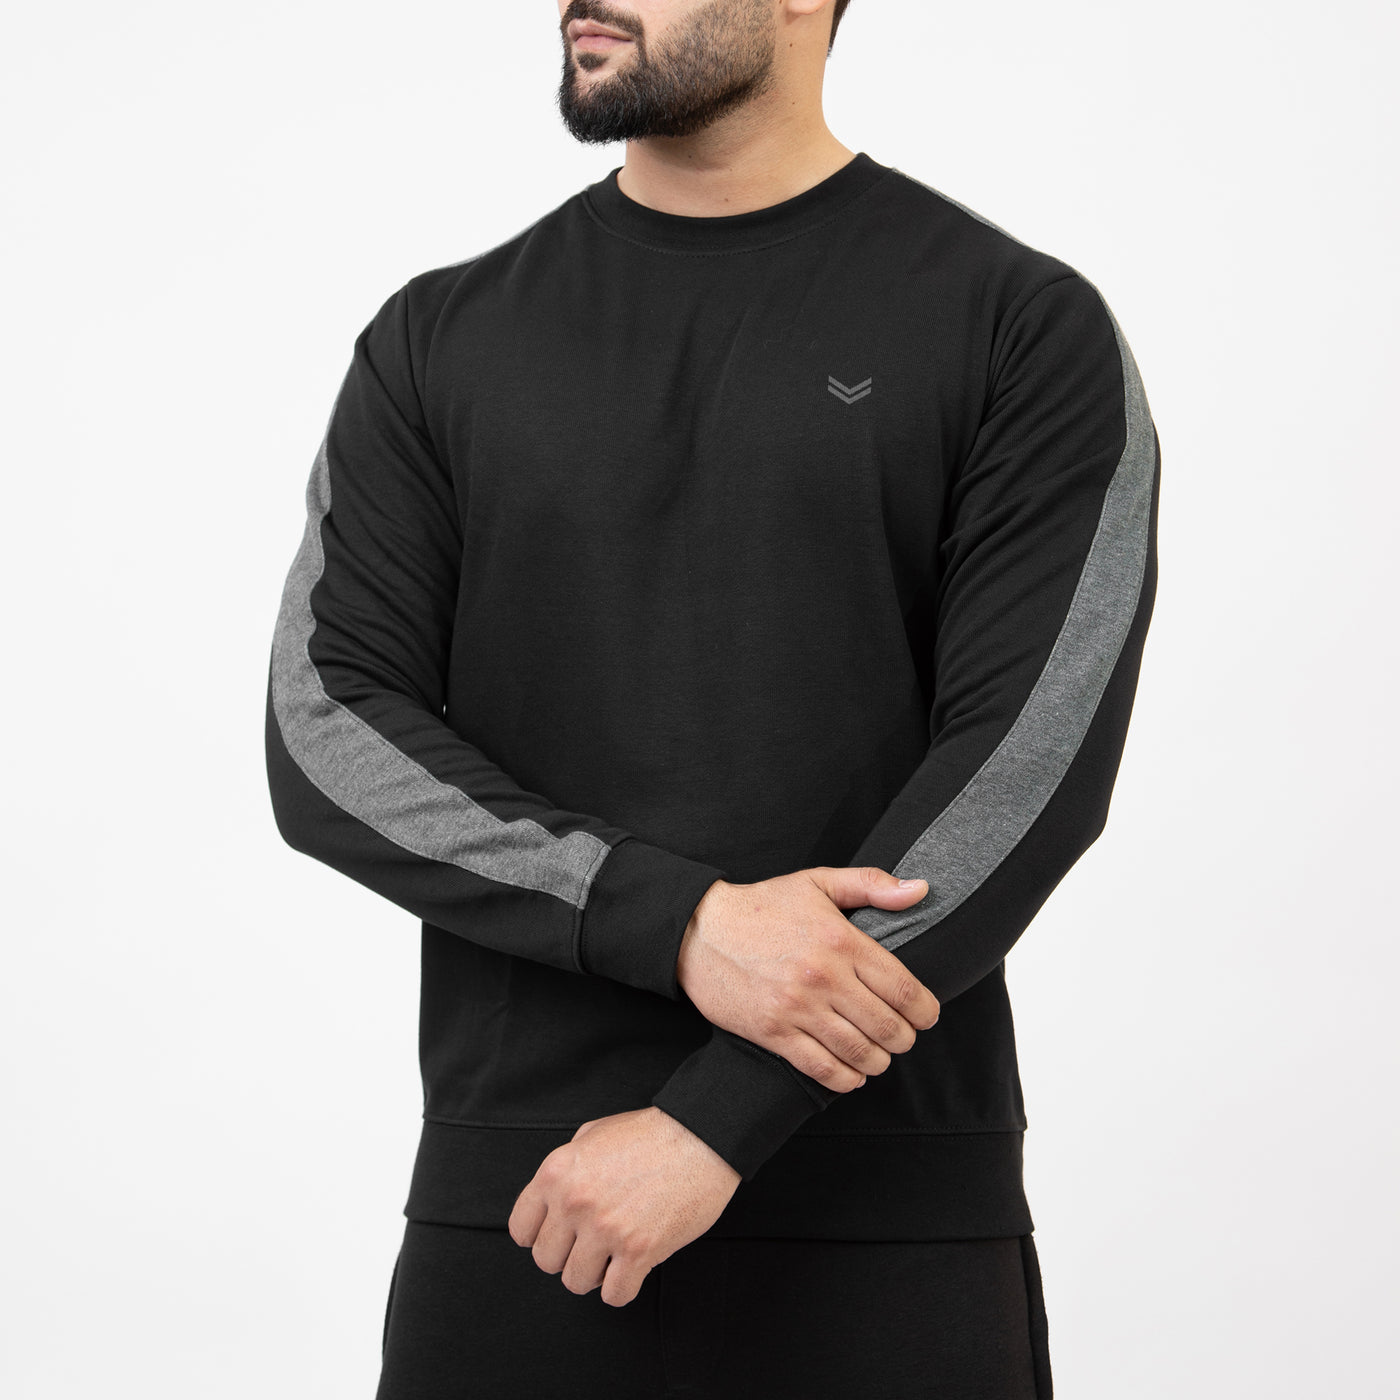 Black Sweatshirt with Textured Gray Panels